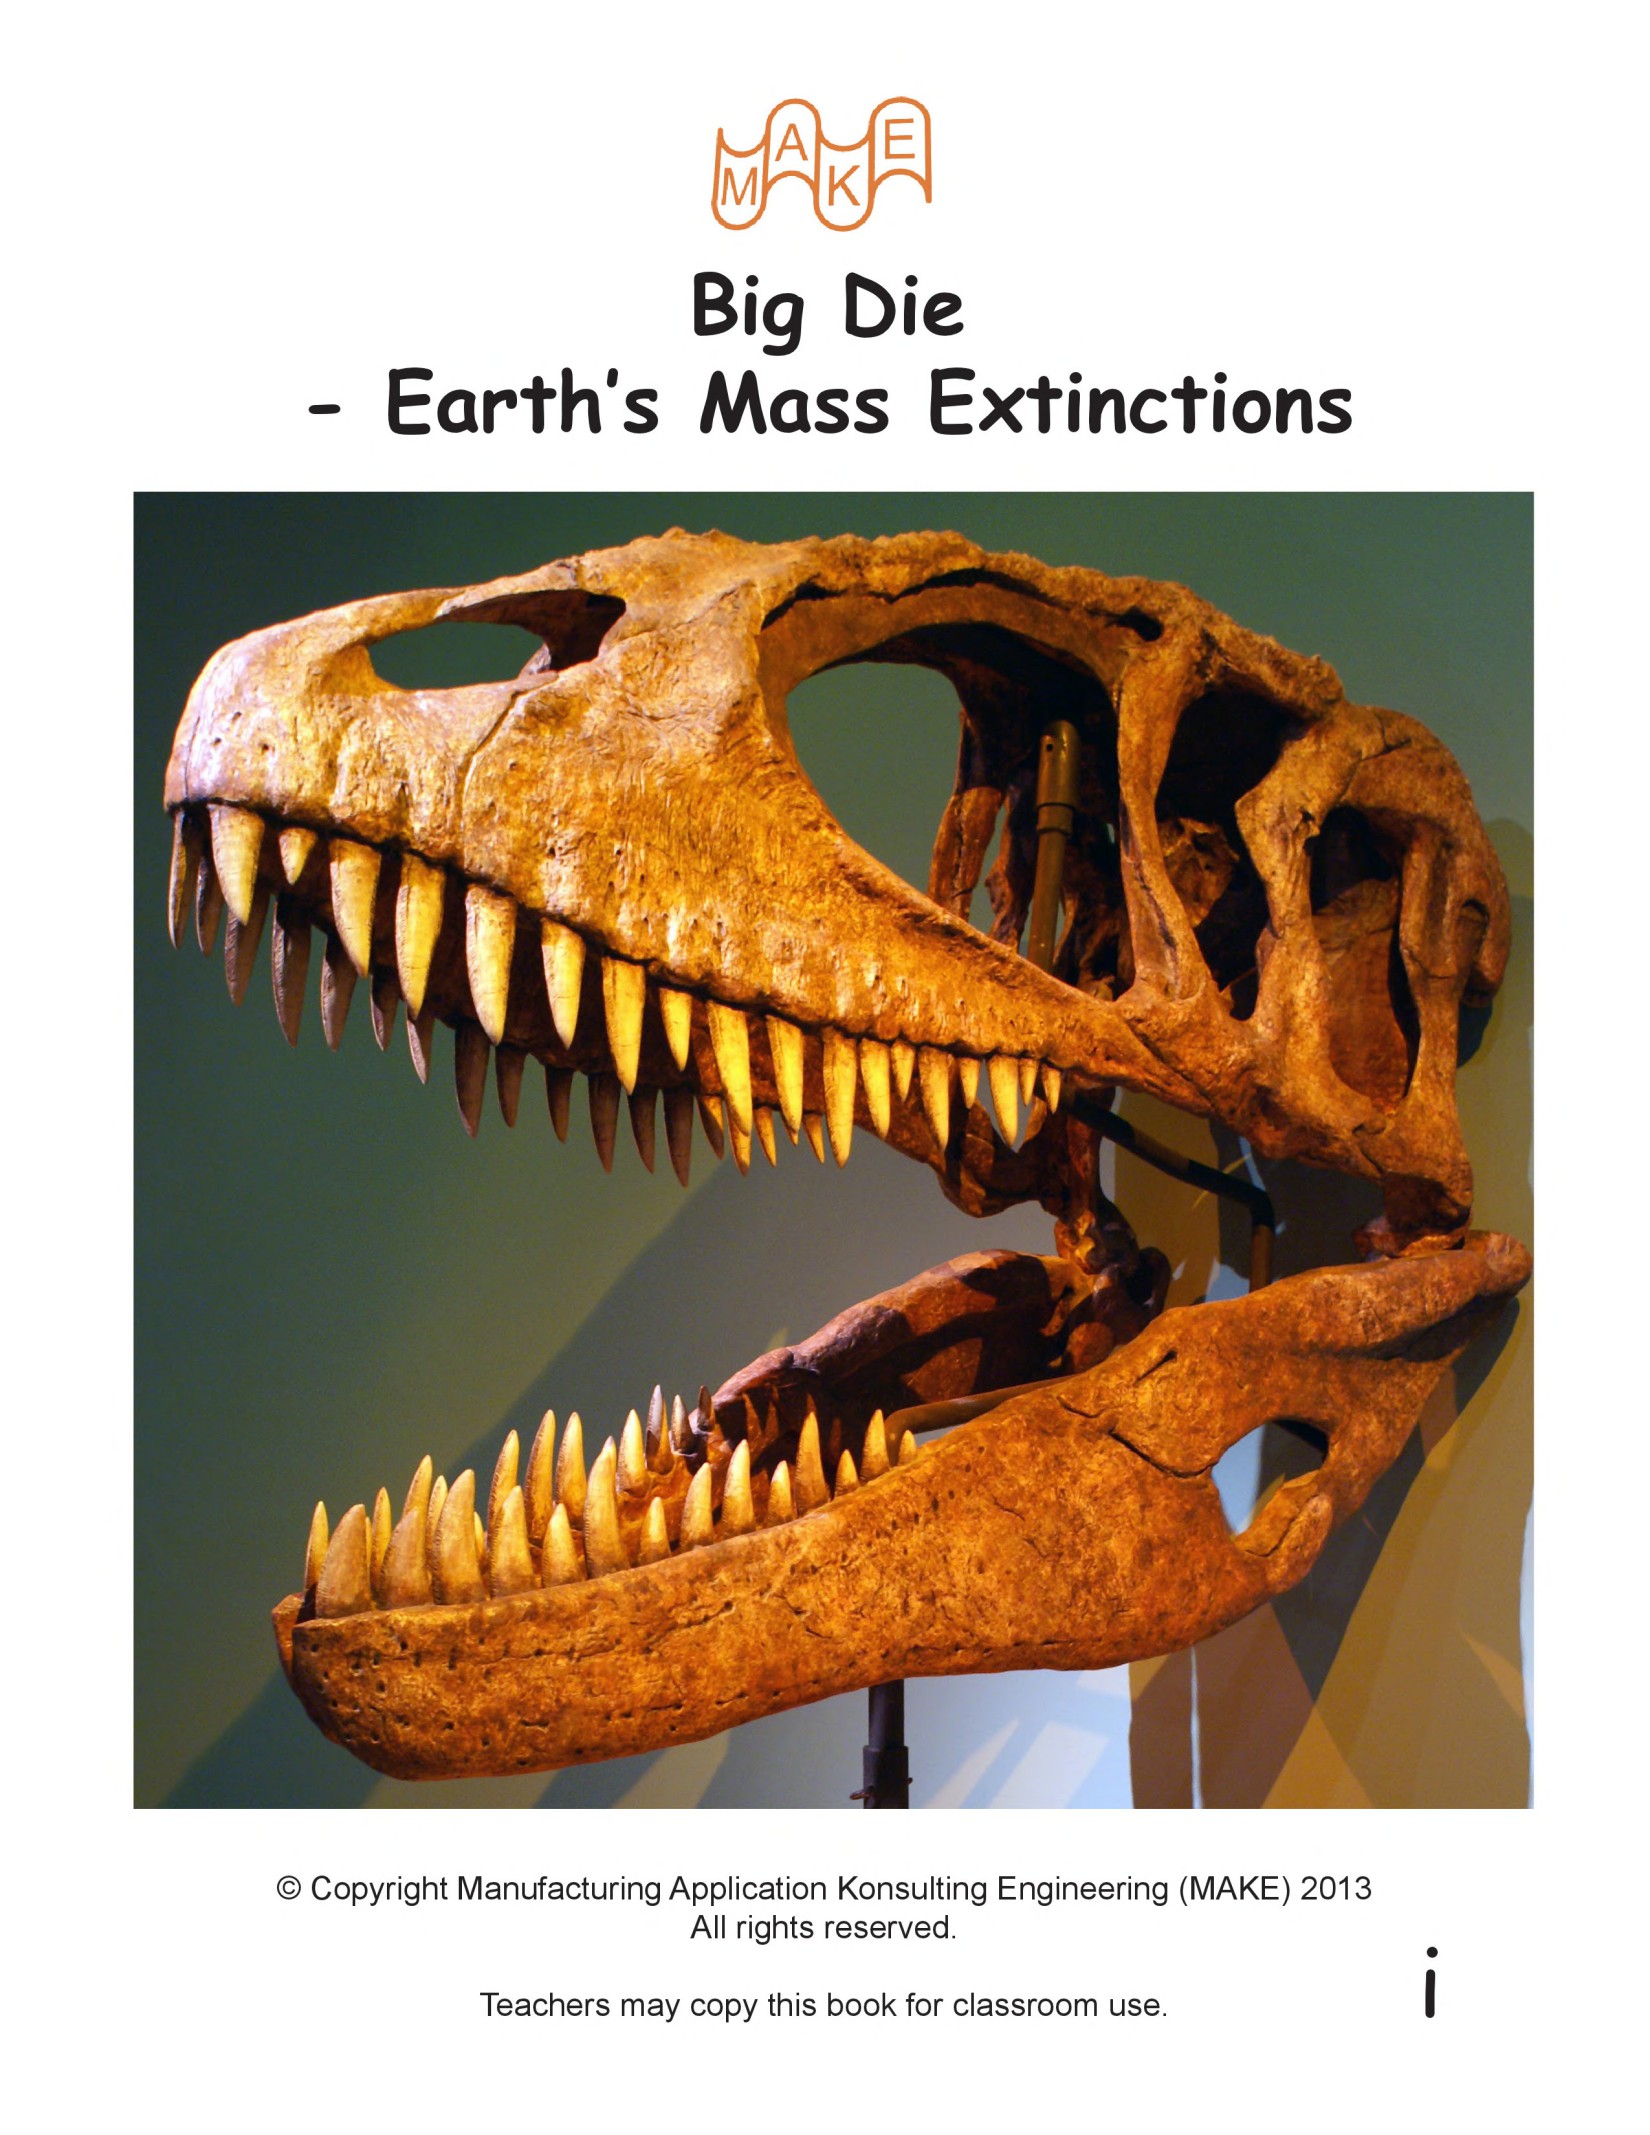 Big Die: Earth's Mass Extinctions